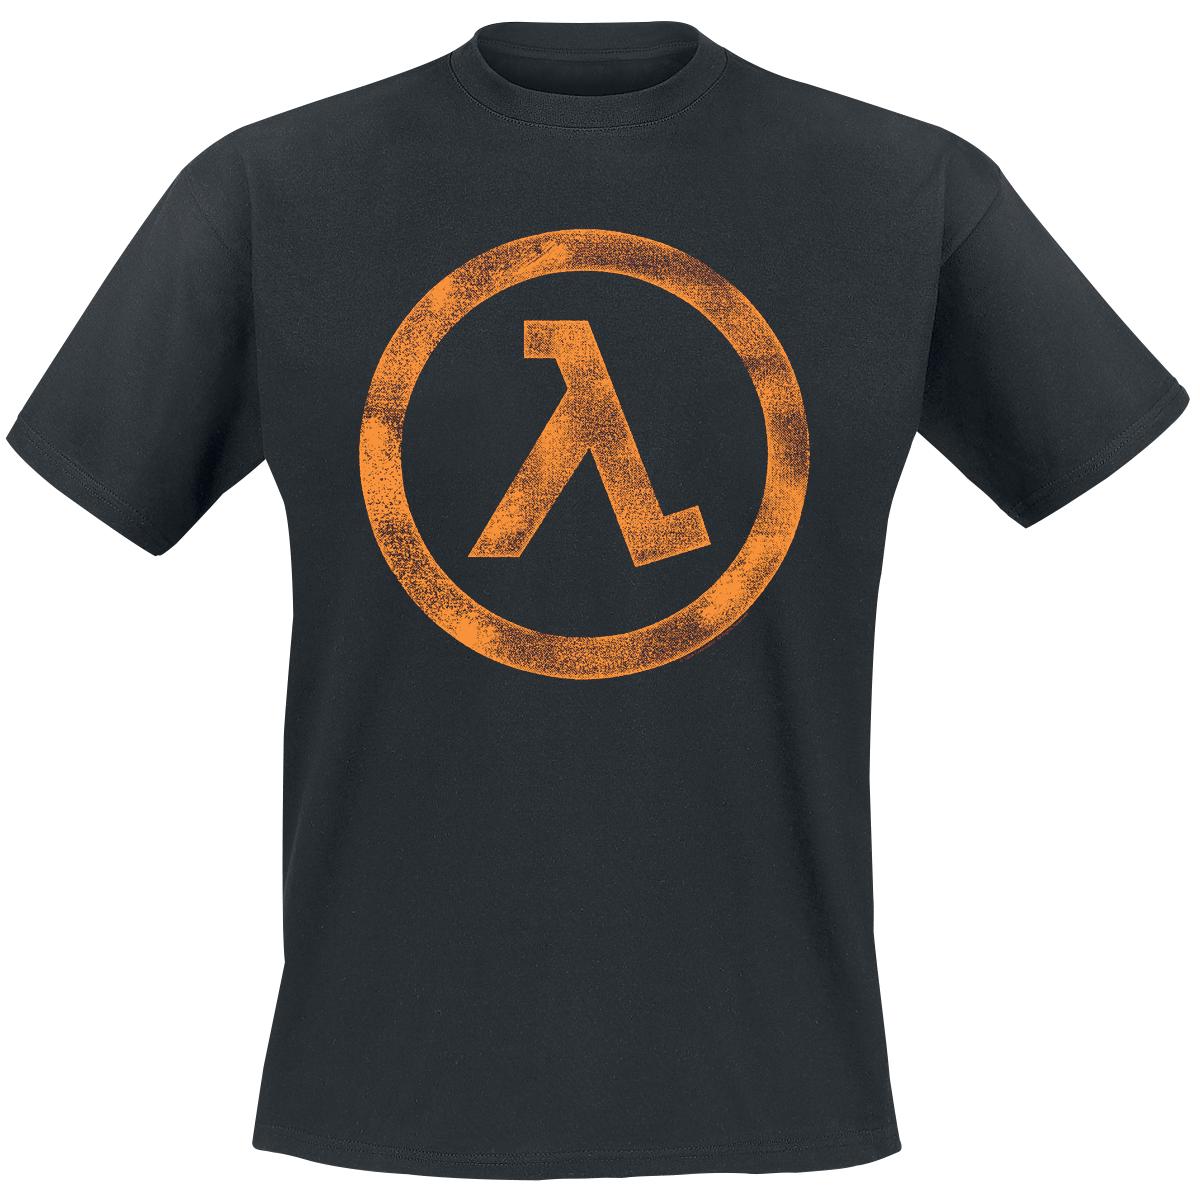 Half-Life 2 - The Orange Box T-shirt Design